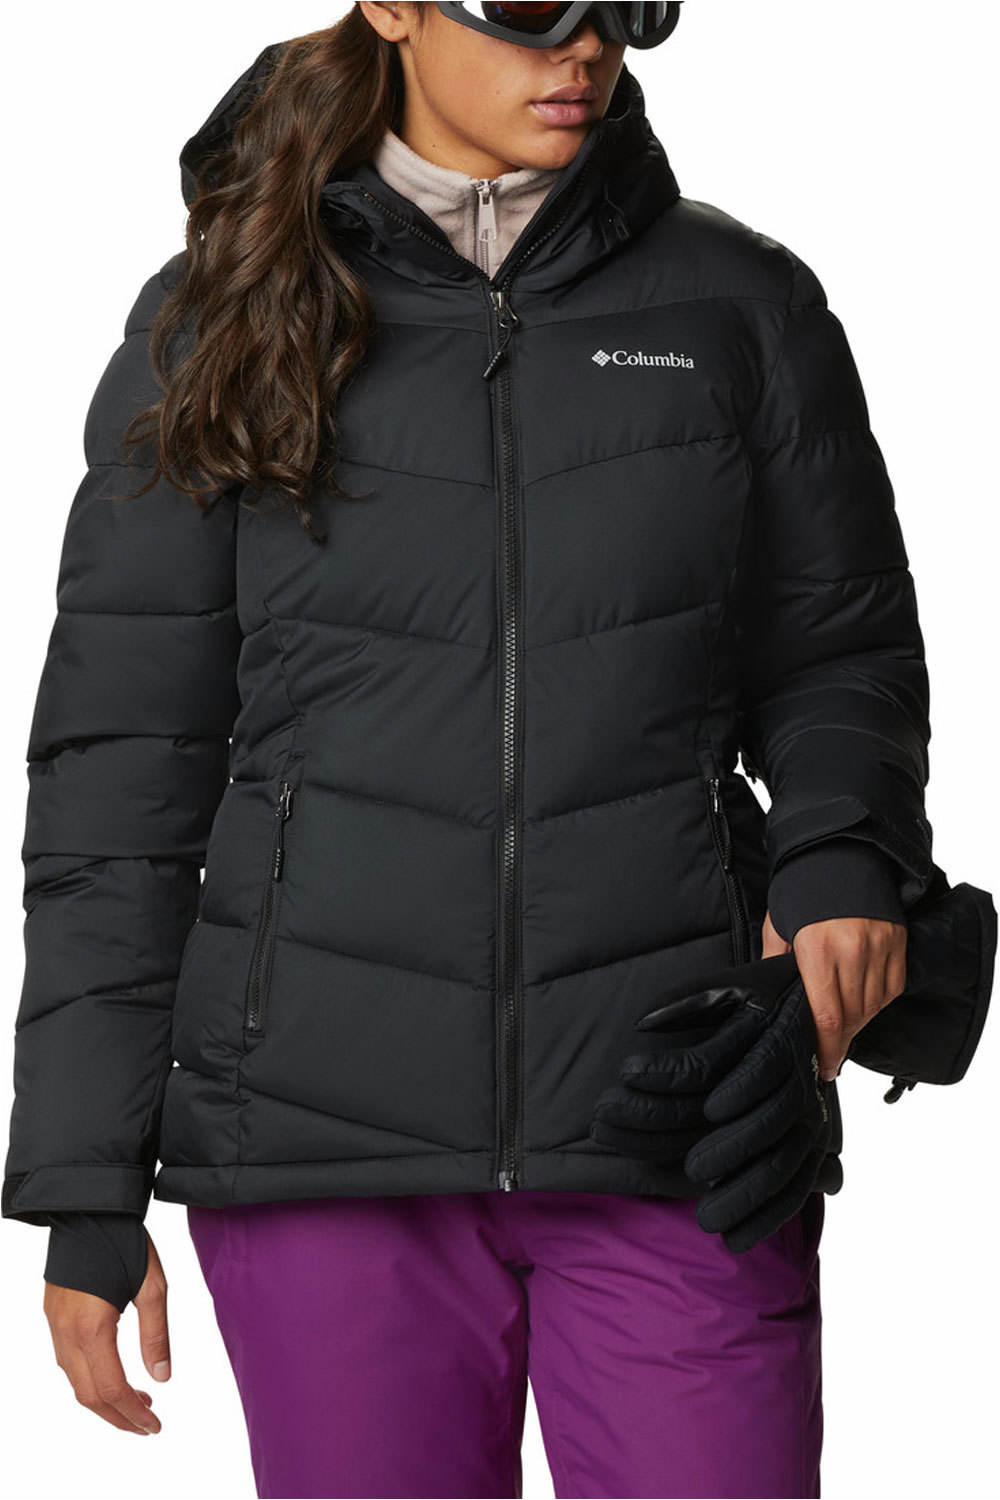 Columbia chaqueta esquí mujer Abbott Peak Insulated Jacket vista frontal